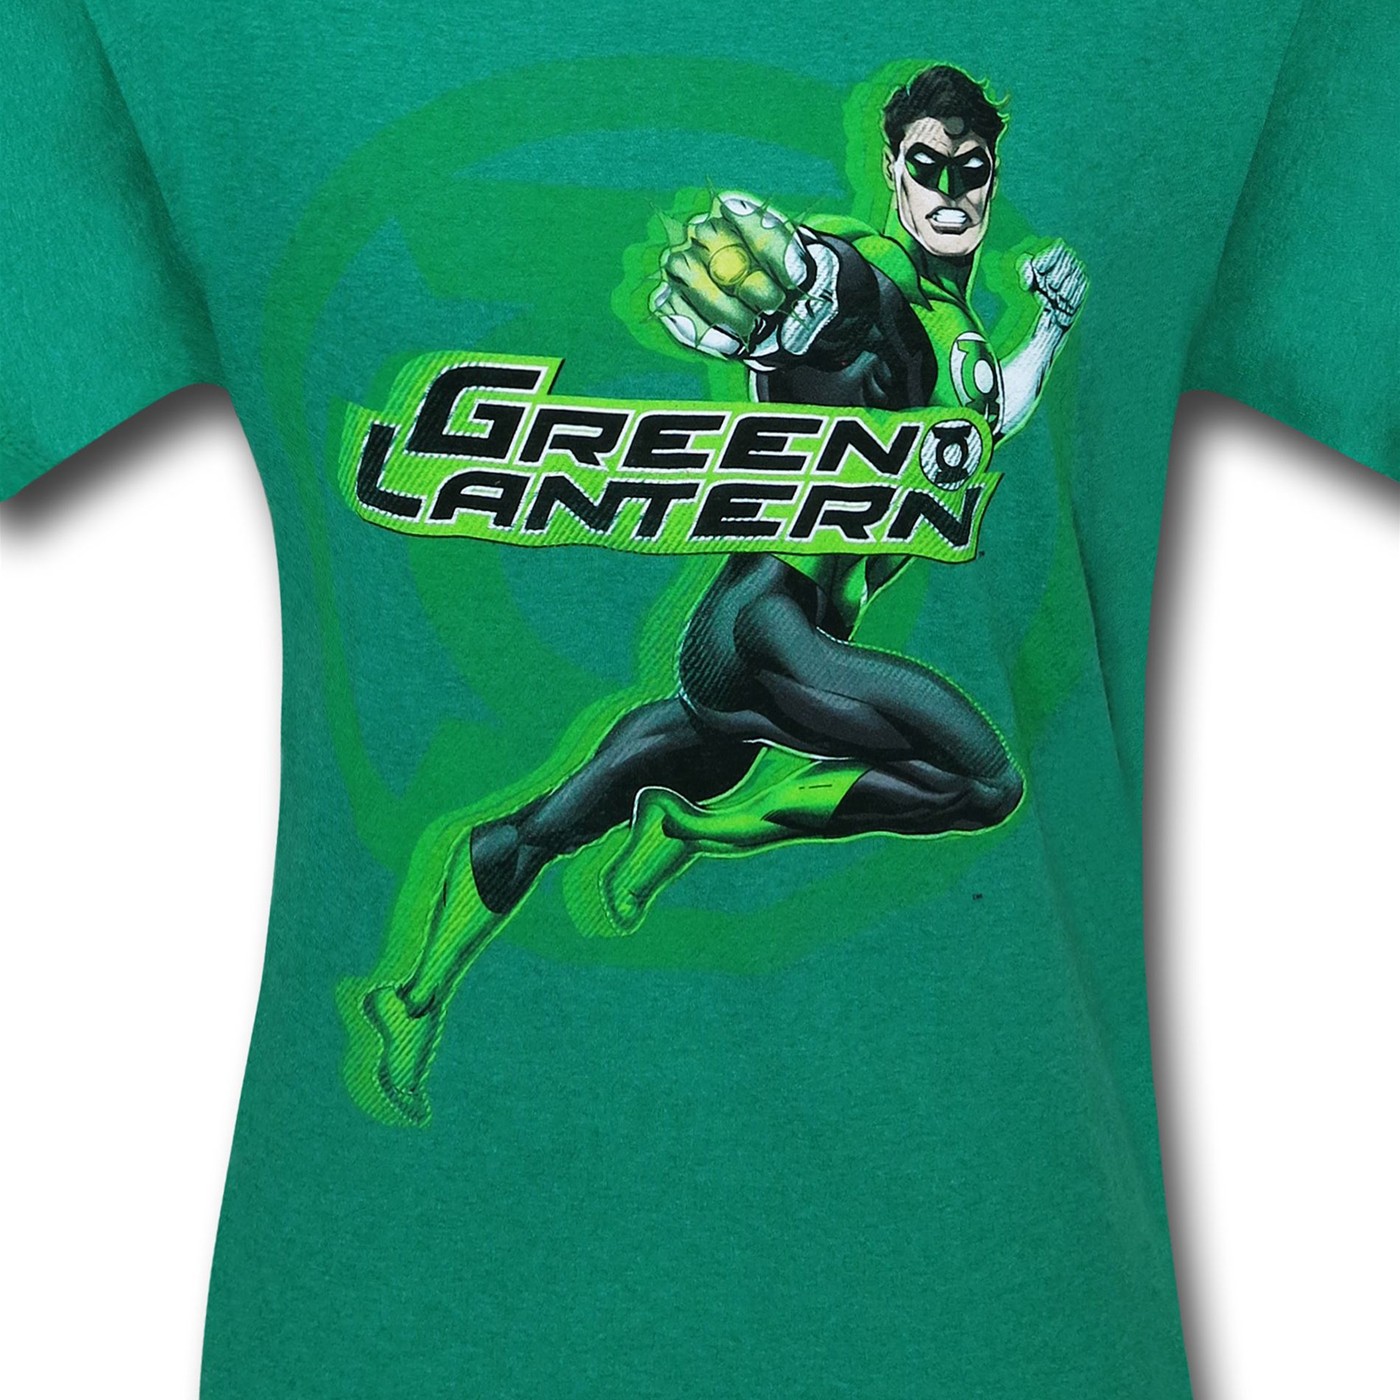 Green Lantern Sideways Shot T-Shirt